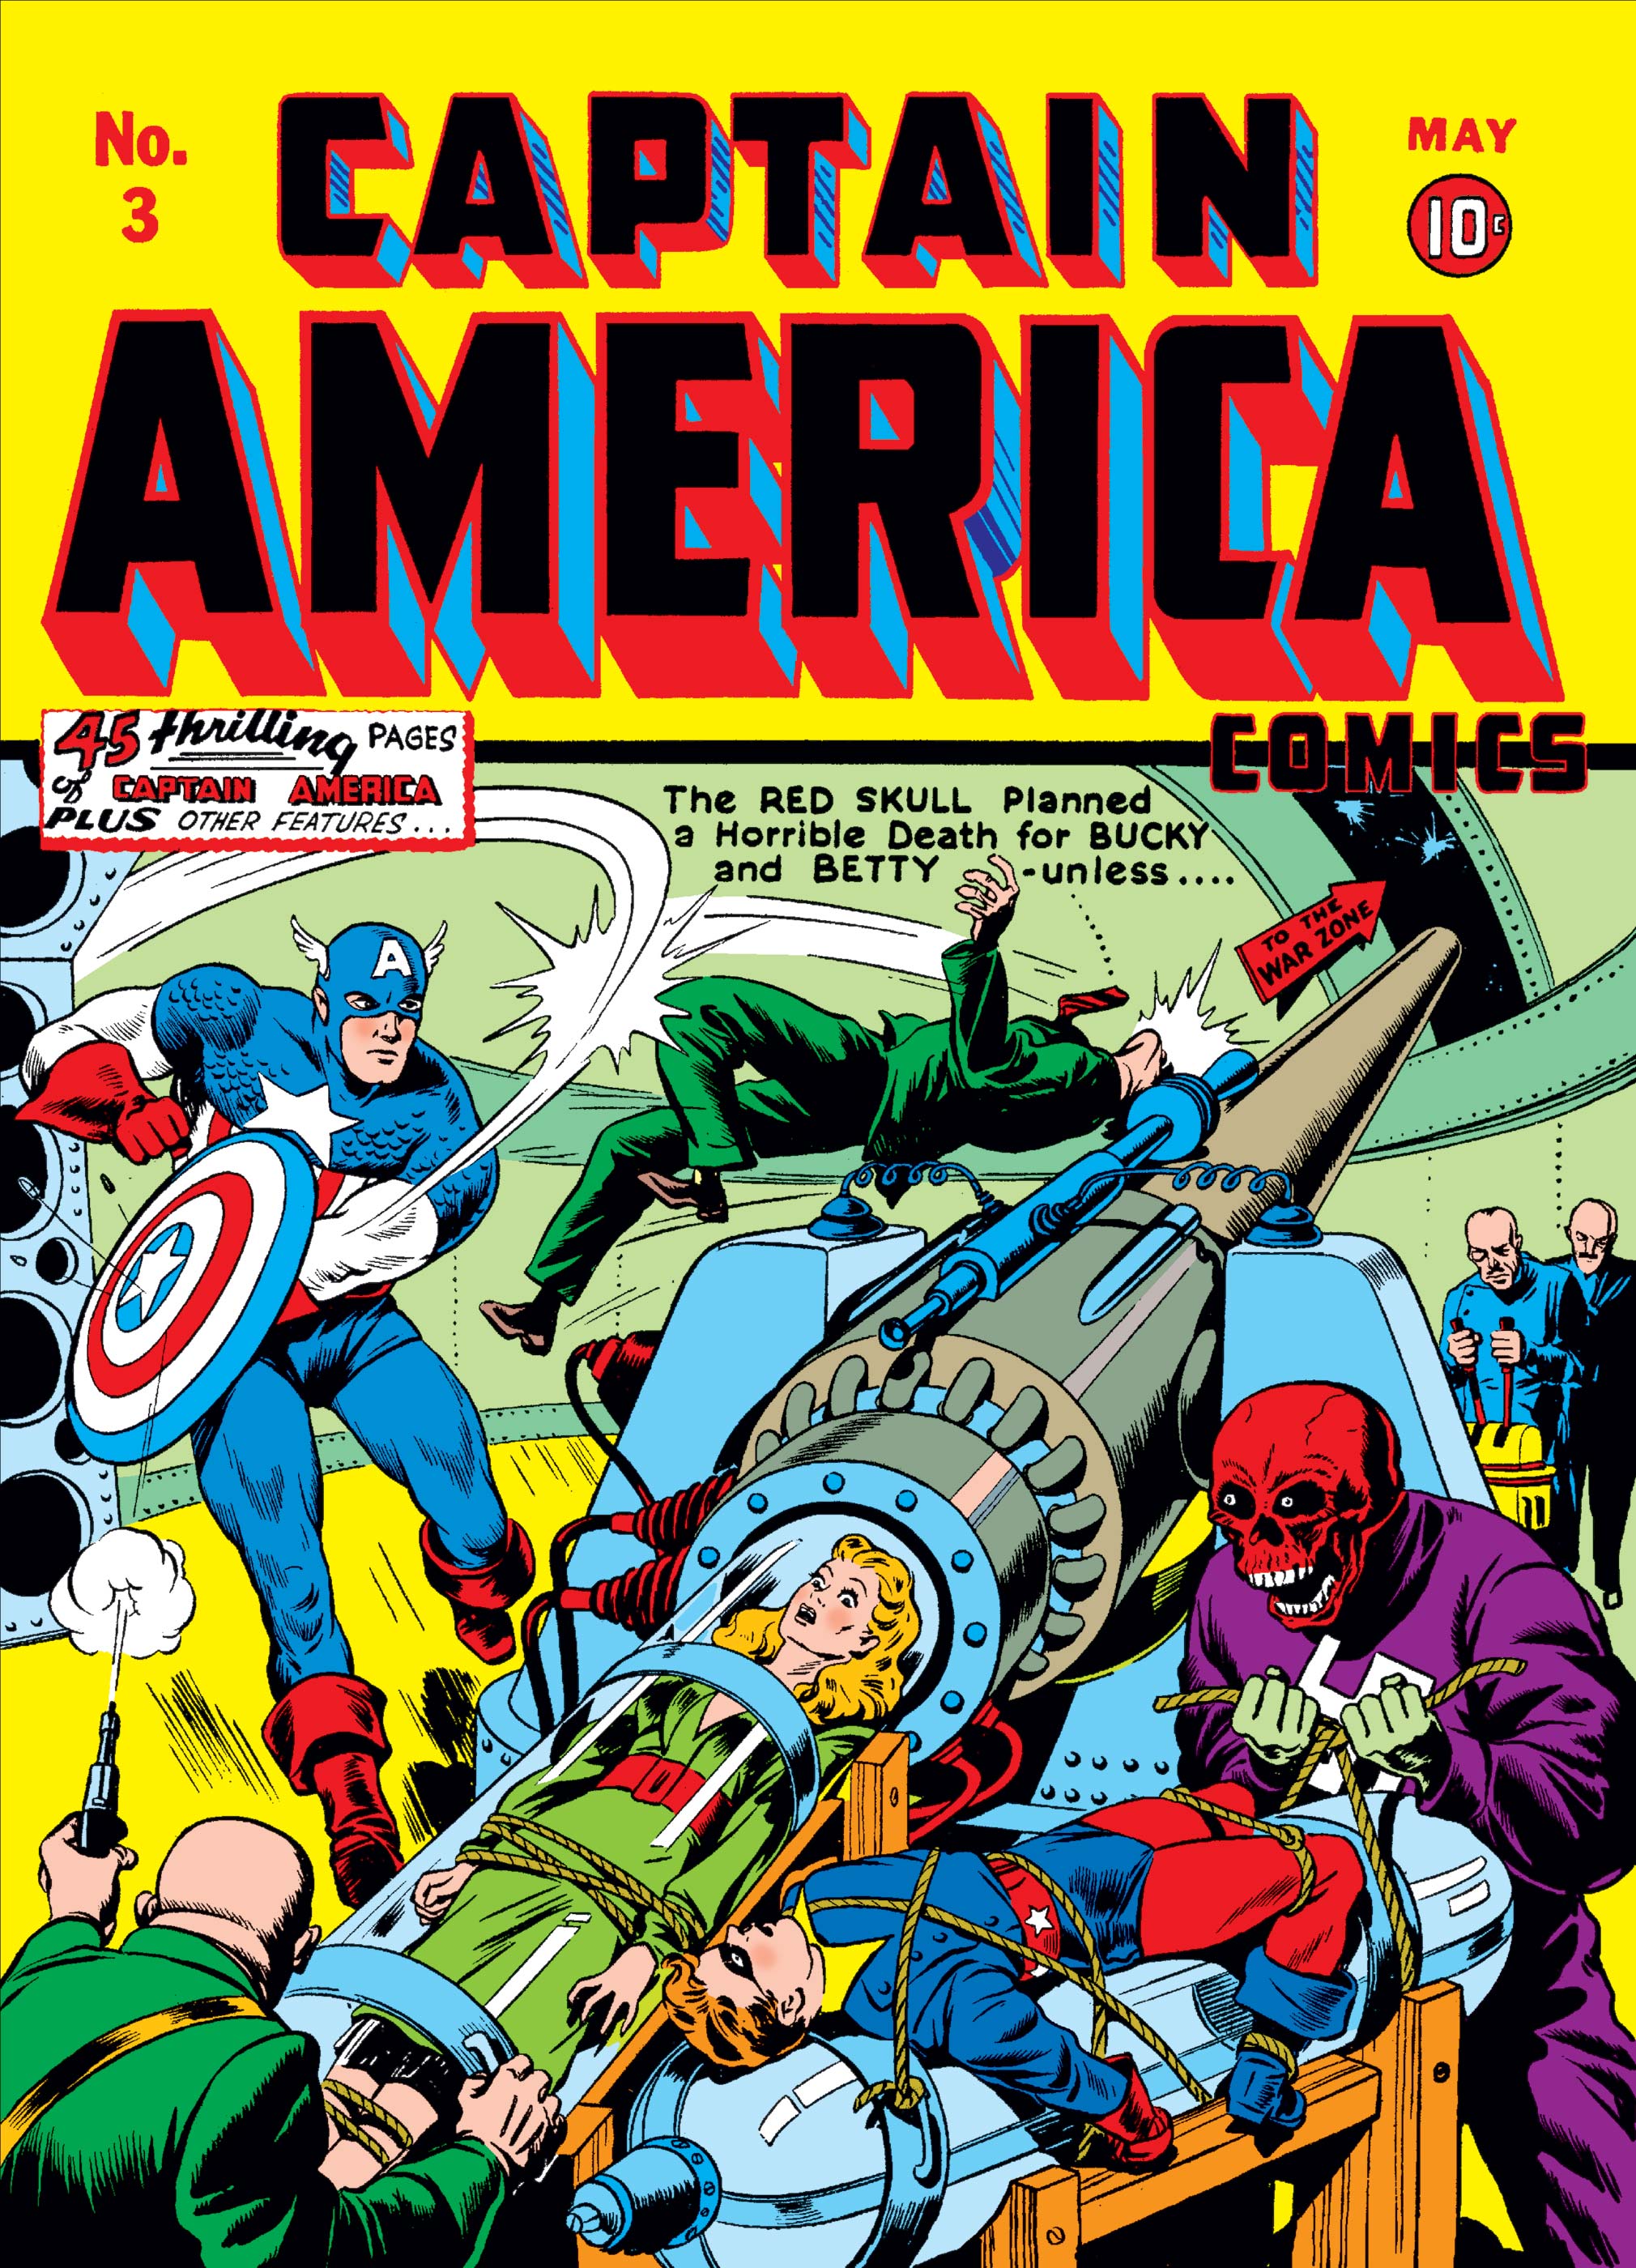 Captain america comics #3